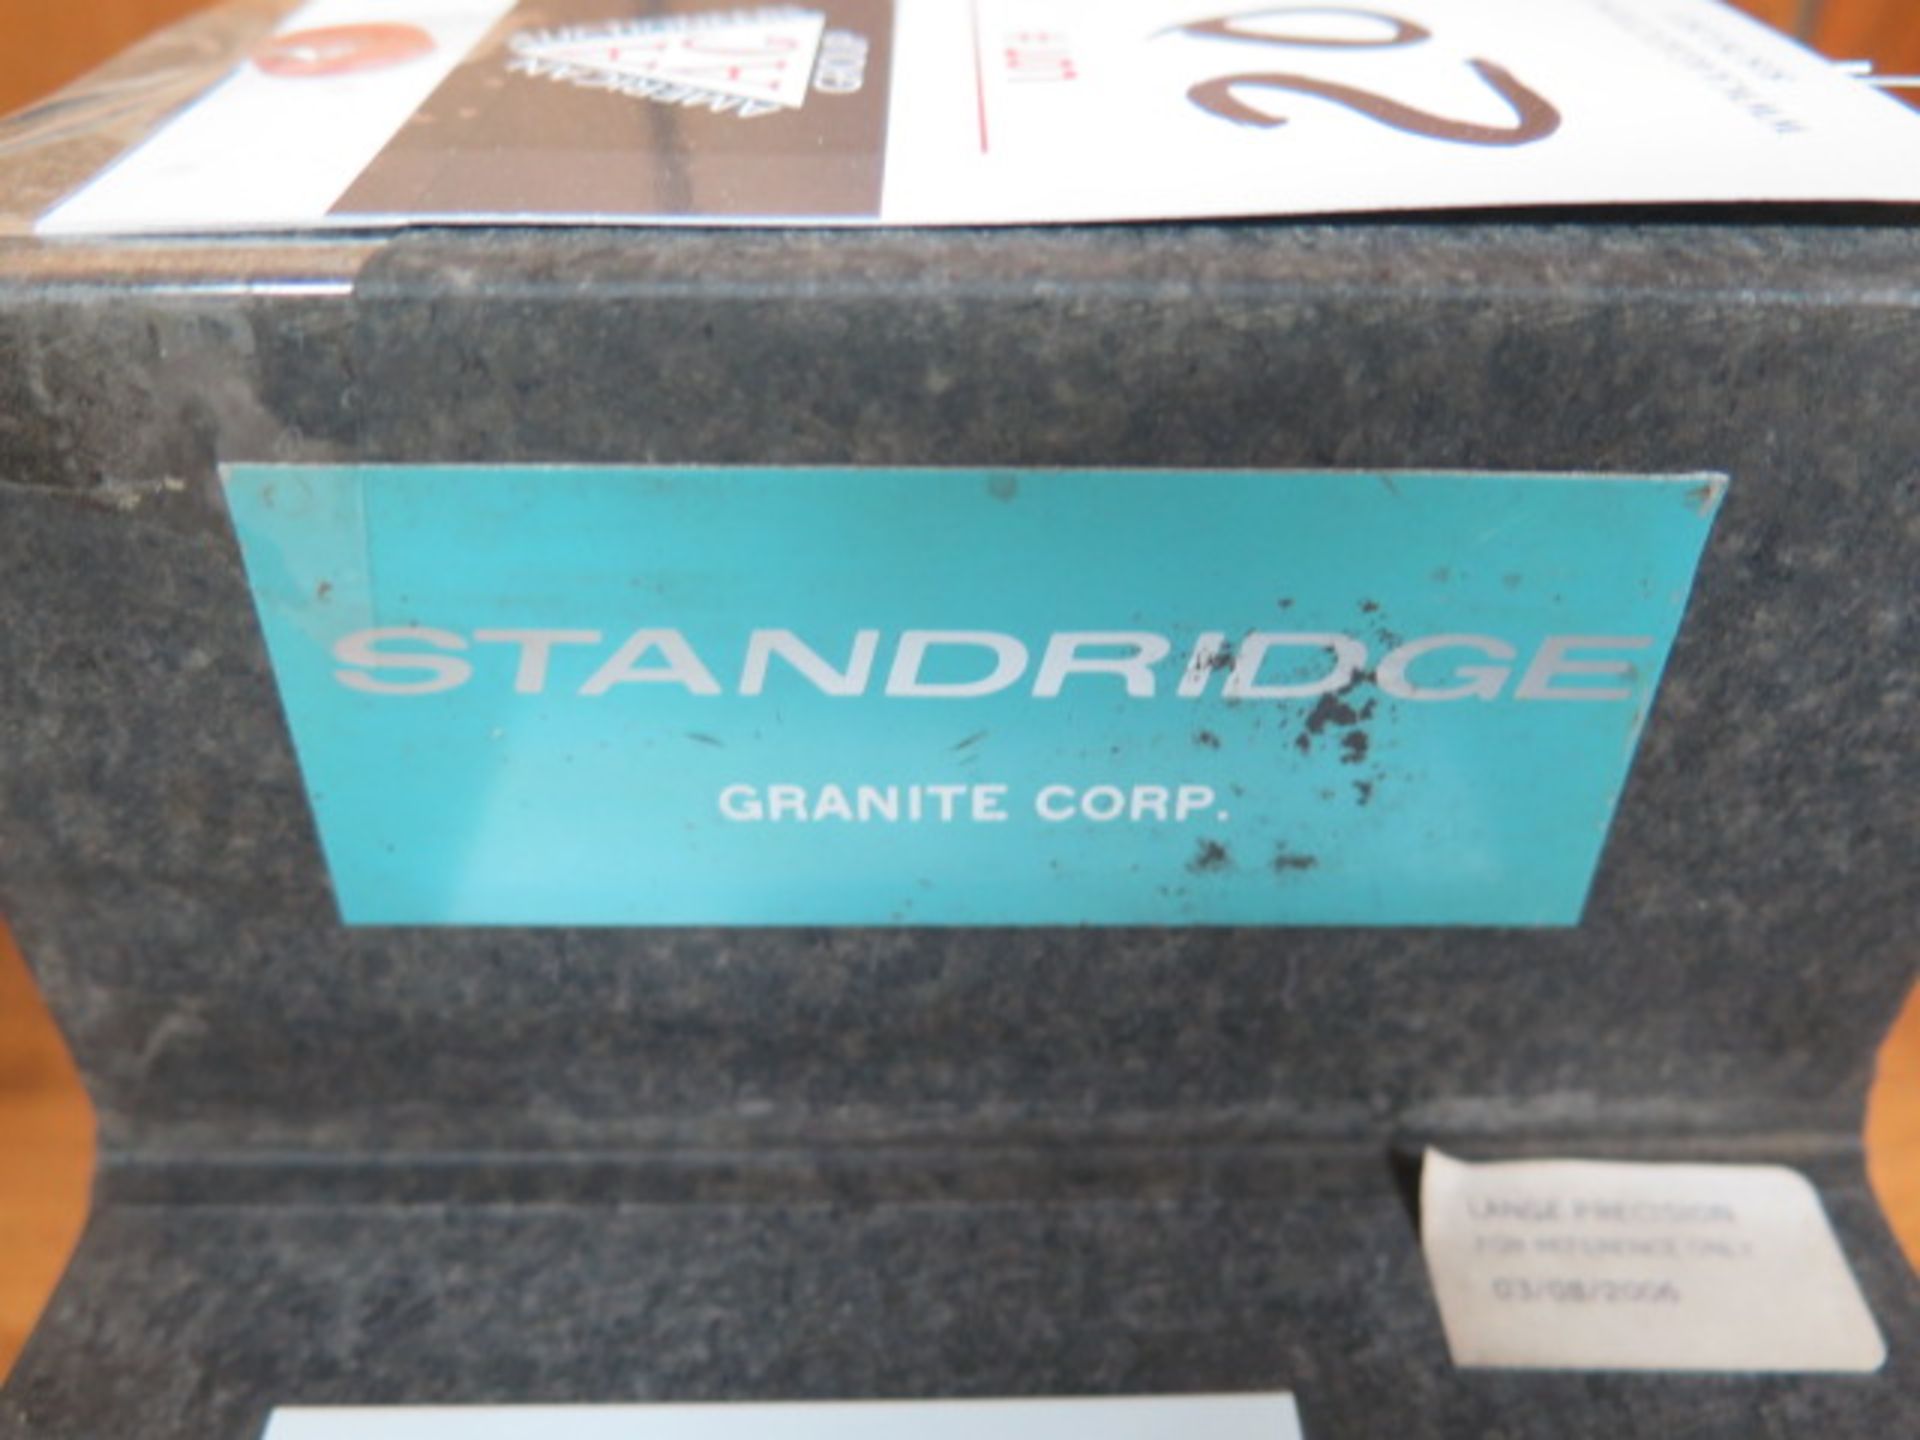 Standridge 6” x 6” x 6” Granite Angle Block (SOLD AS-IS - NO WARRANTY) - Image 4 of 4